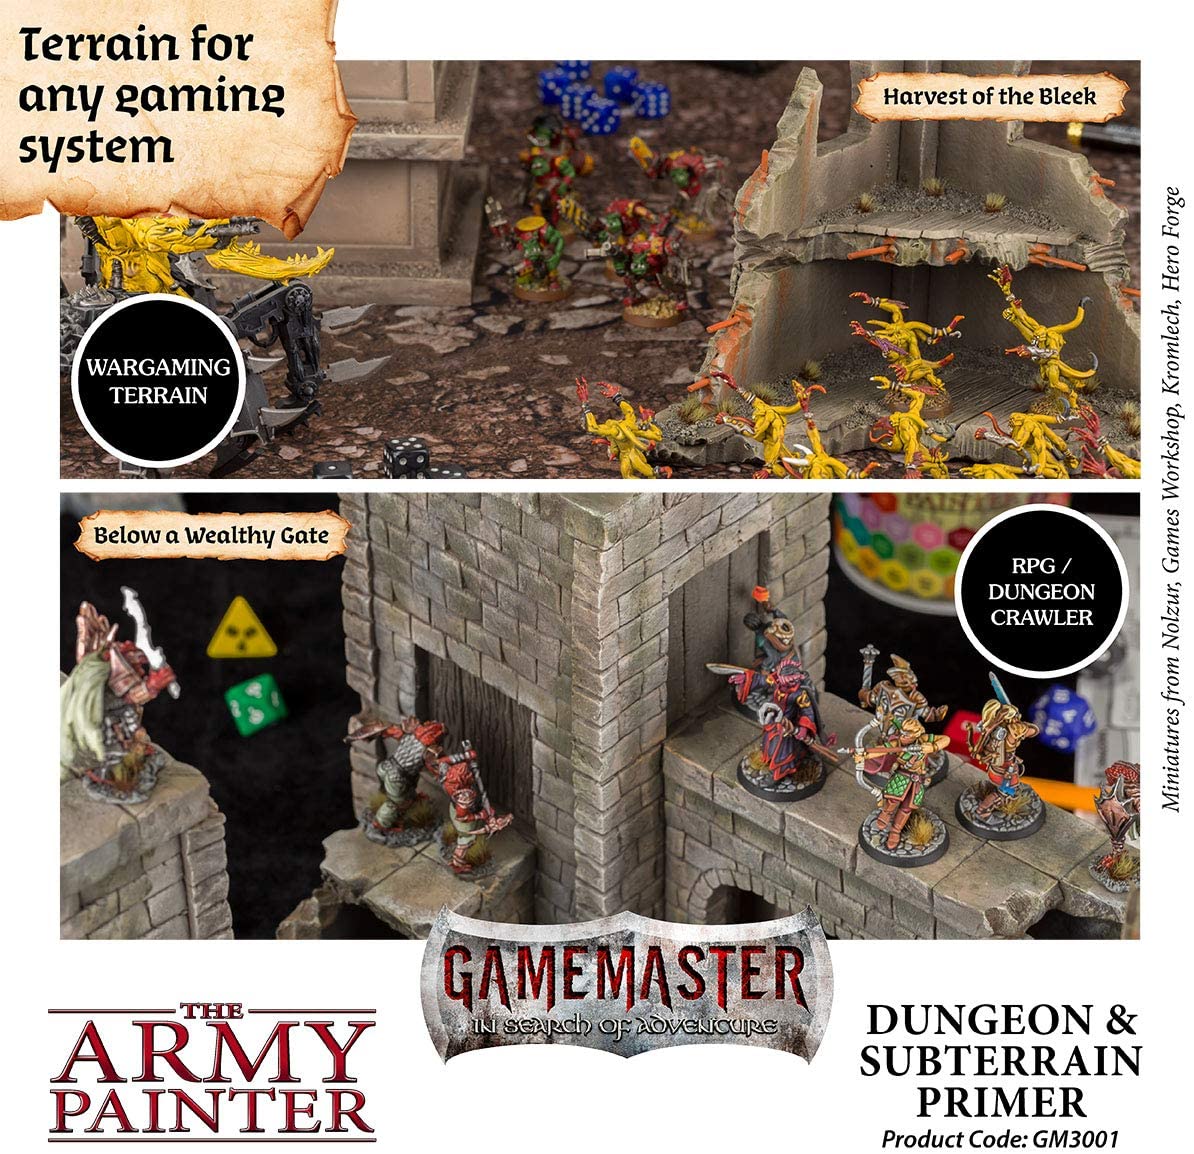 The Army Painter - Gamemaster: Dungeon & Subterrain Primer